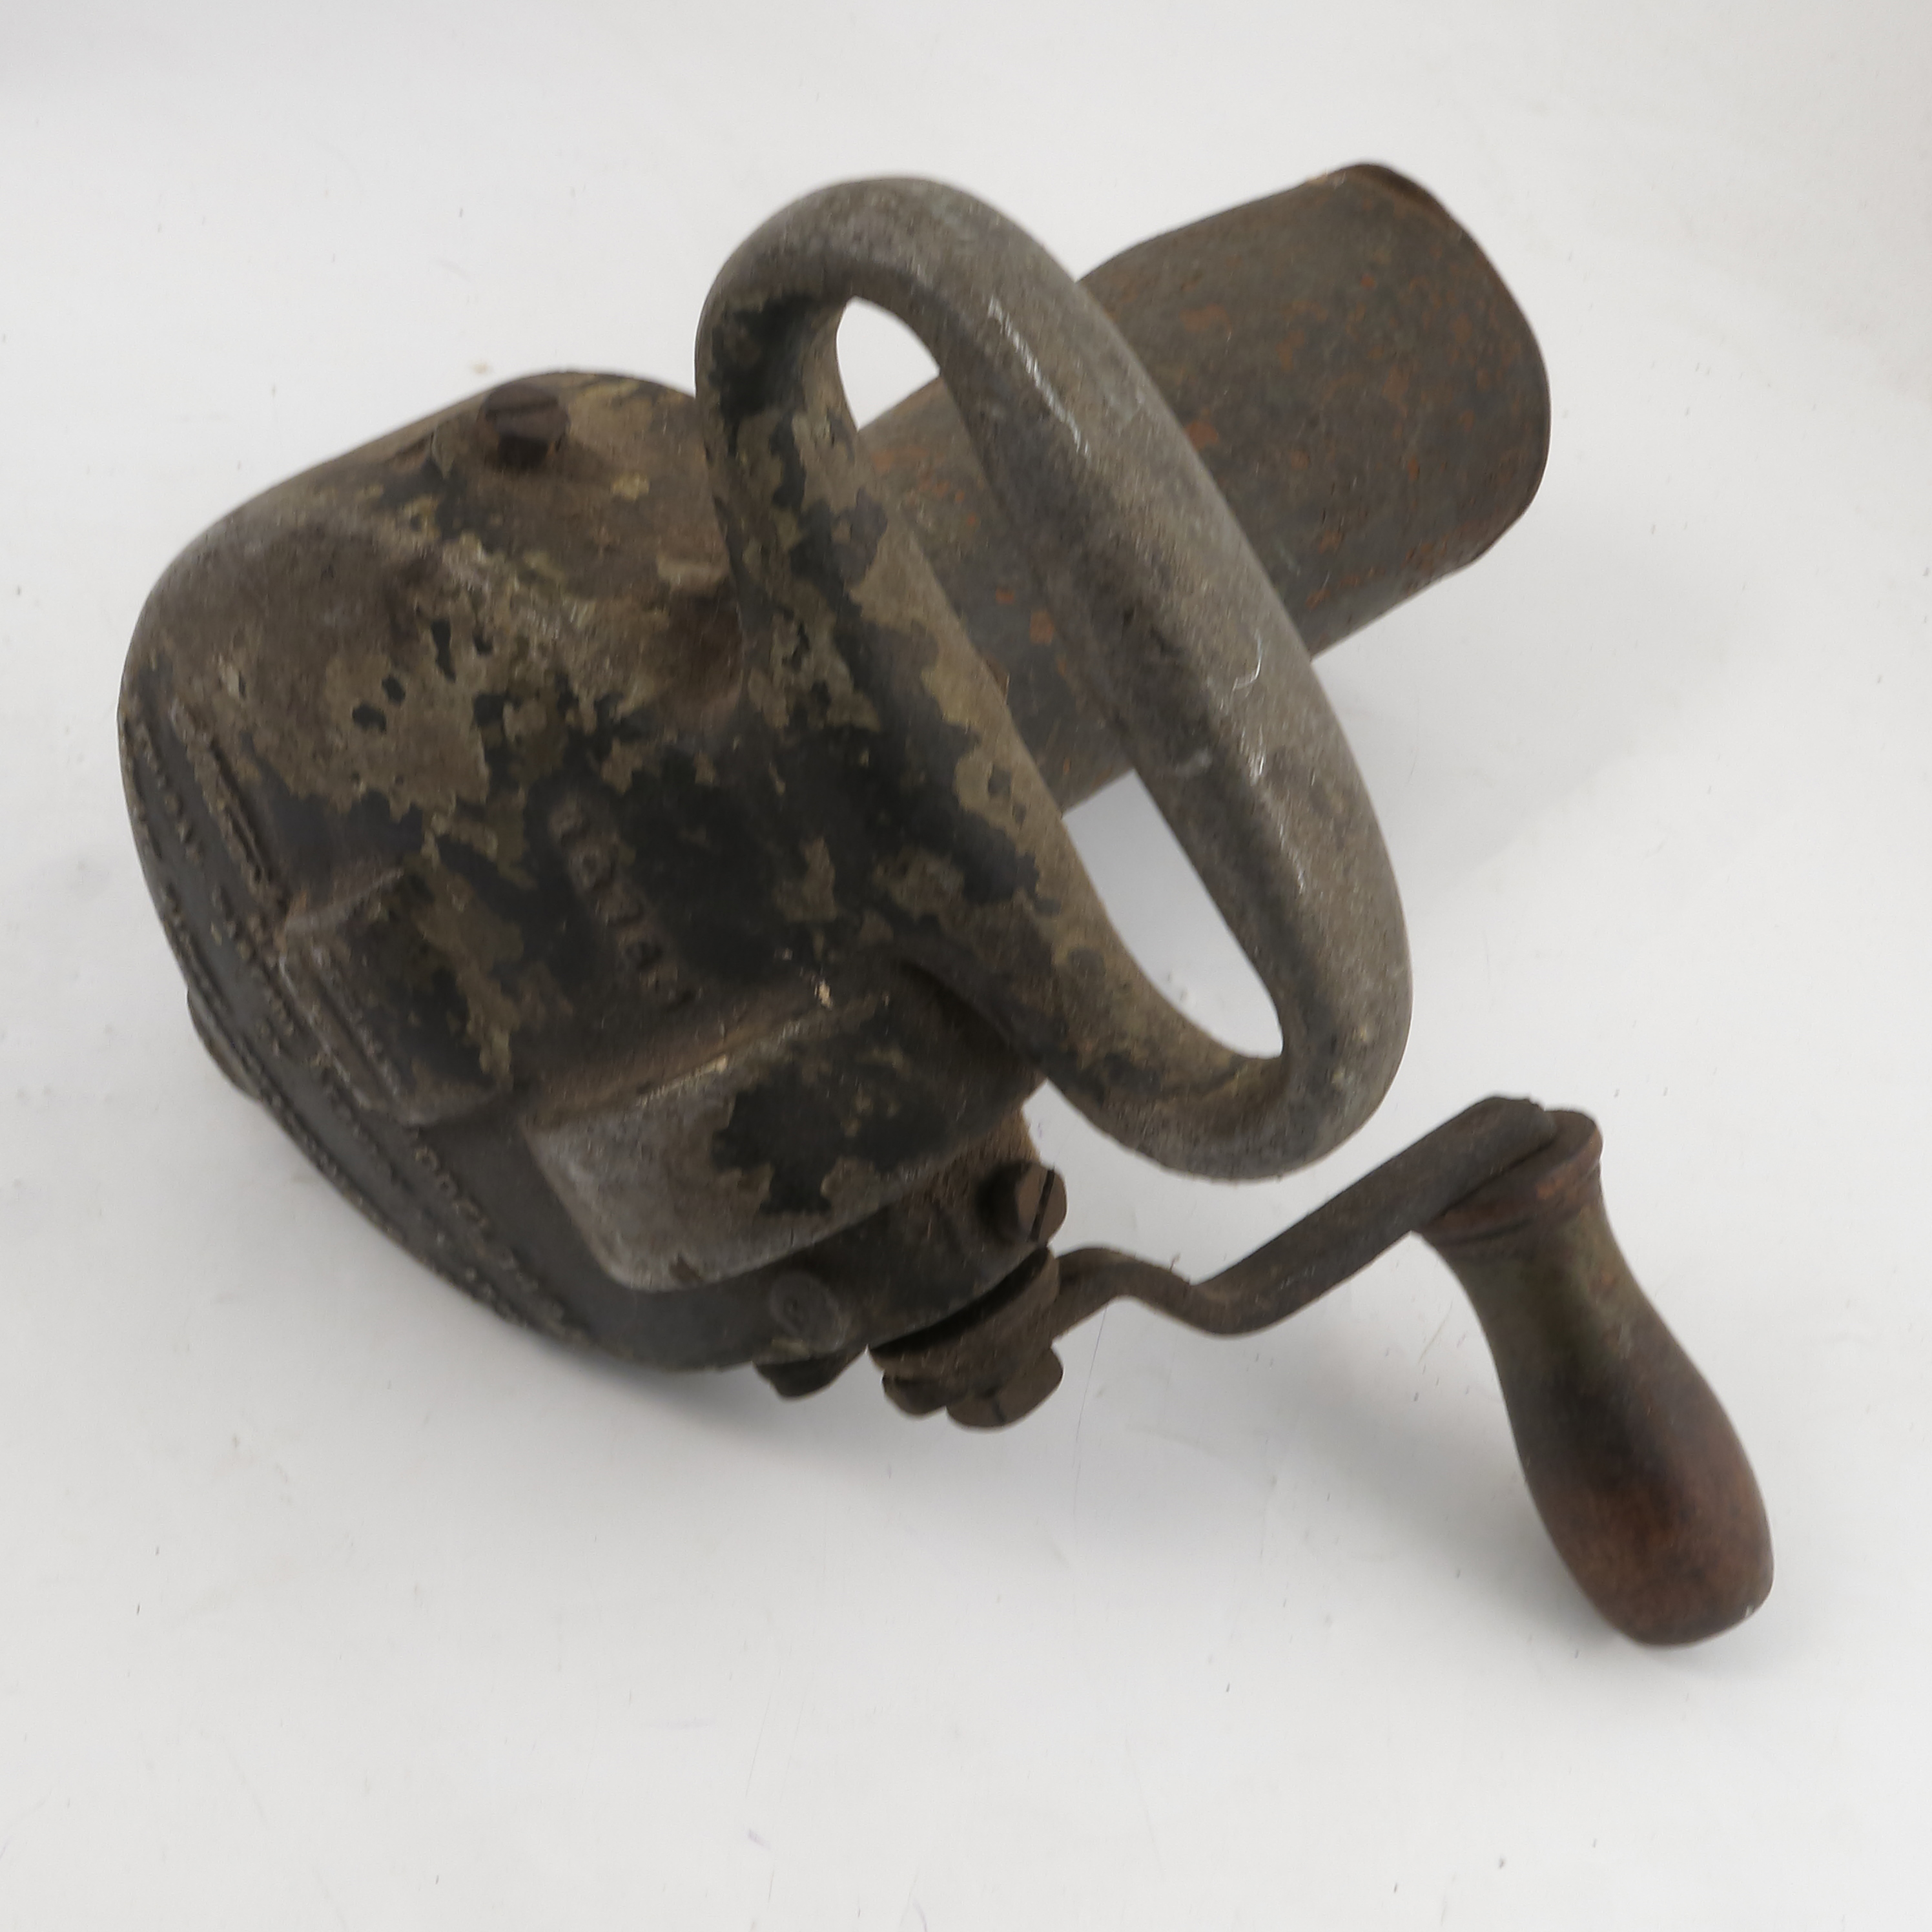 An army issue hand crank air raid siren, model 749, - Image 3 of 3